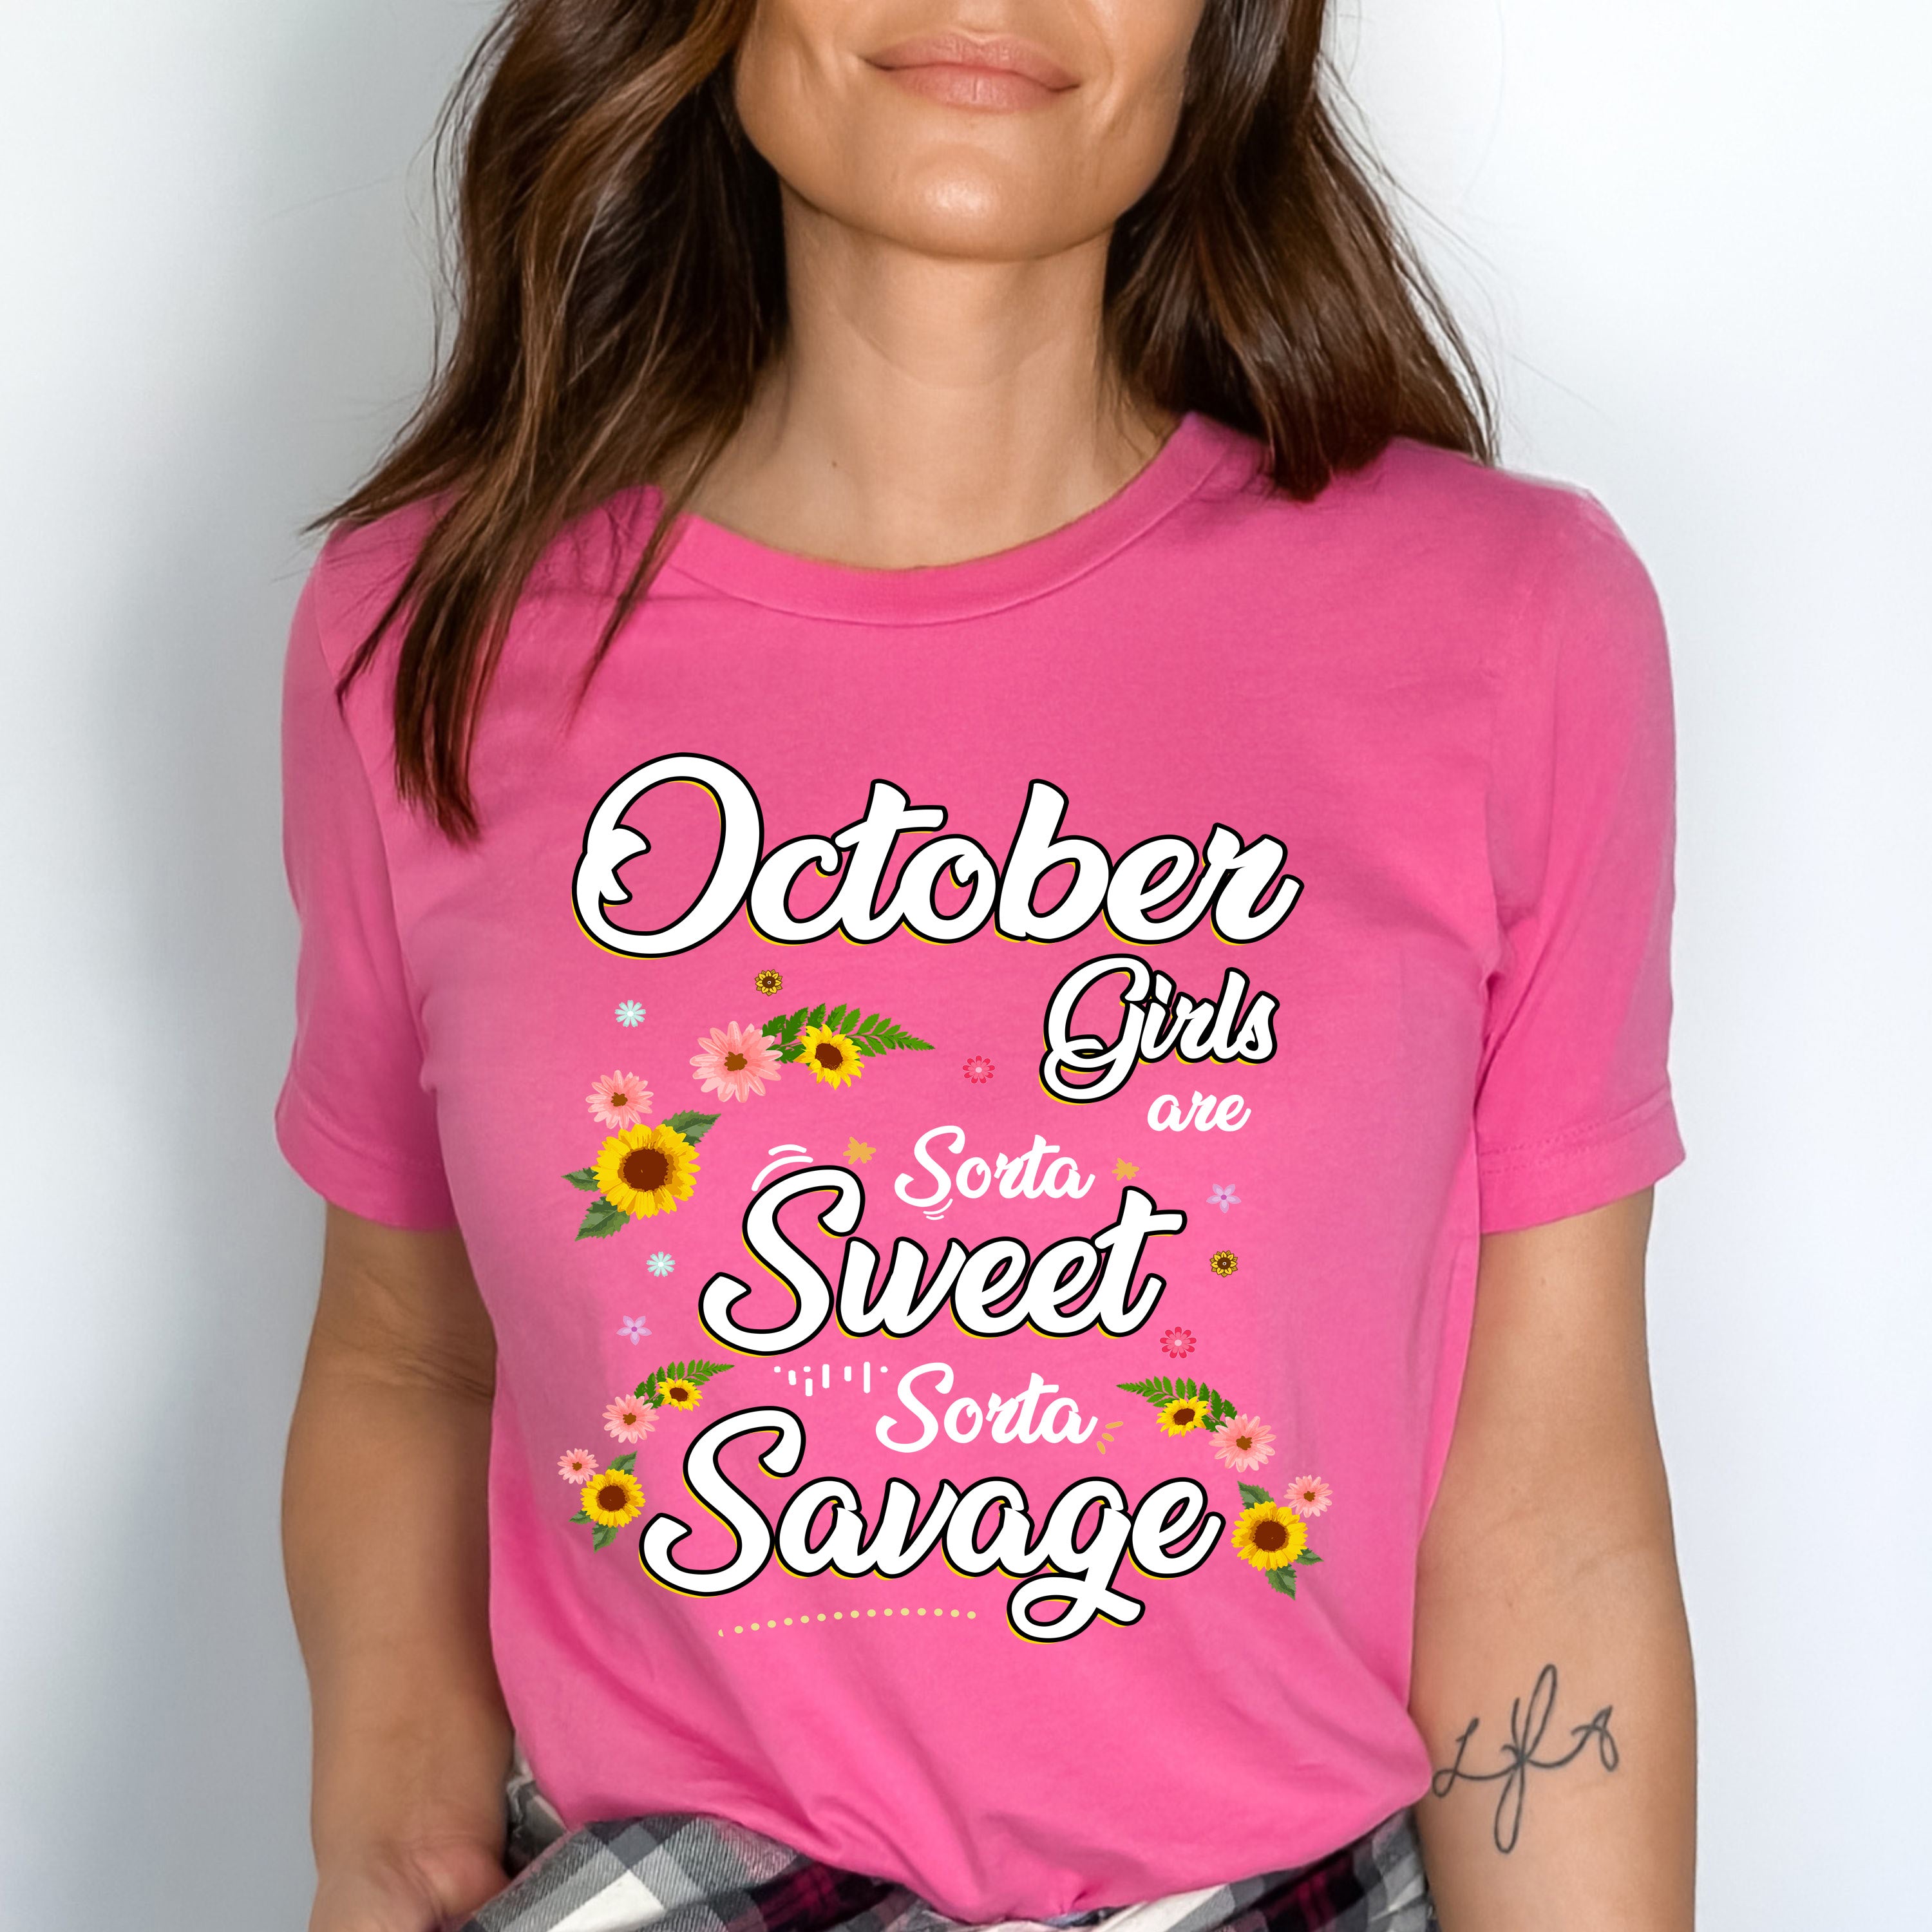 "October Girls Are Sorta Sweet Sorta Savage"